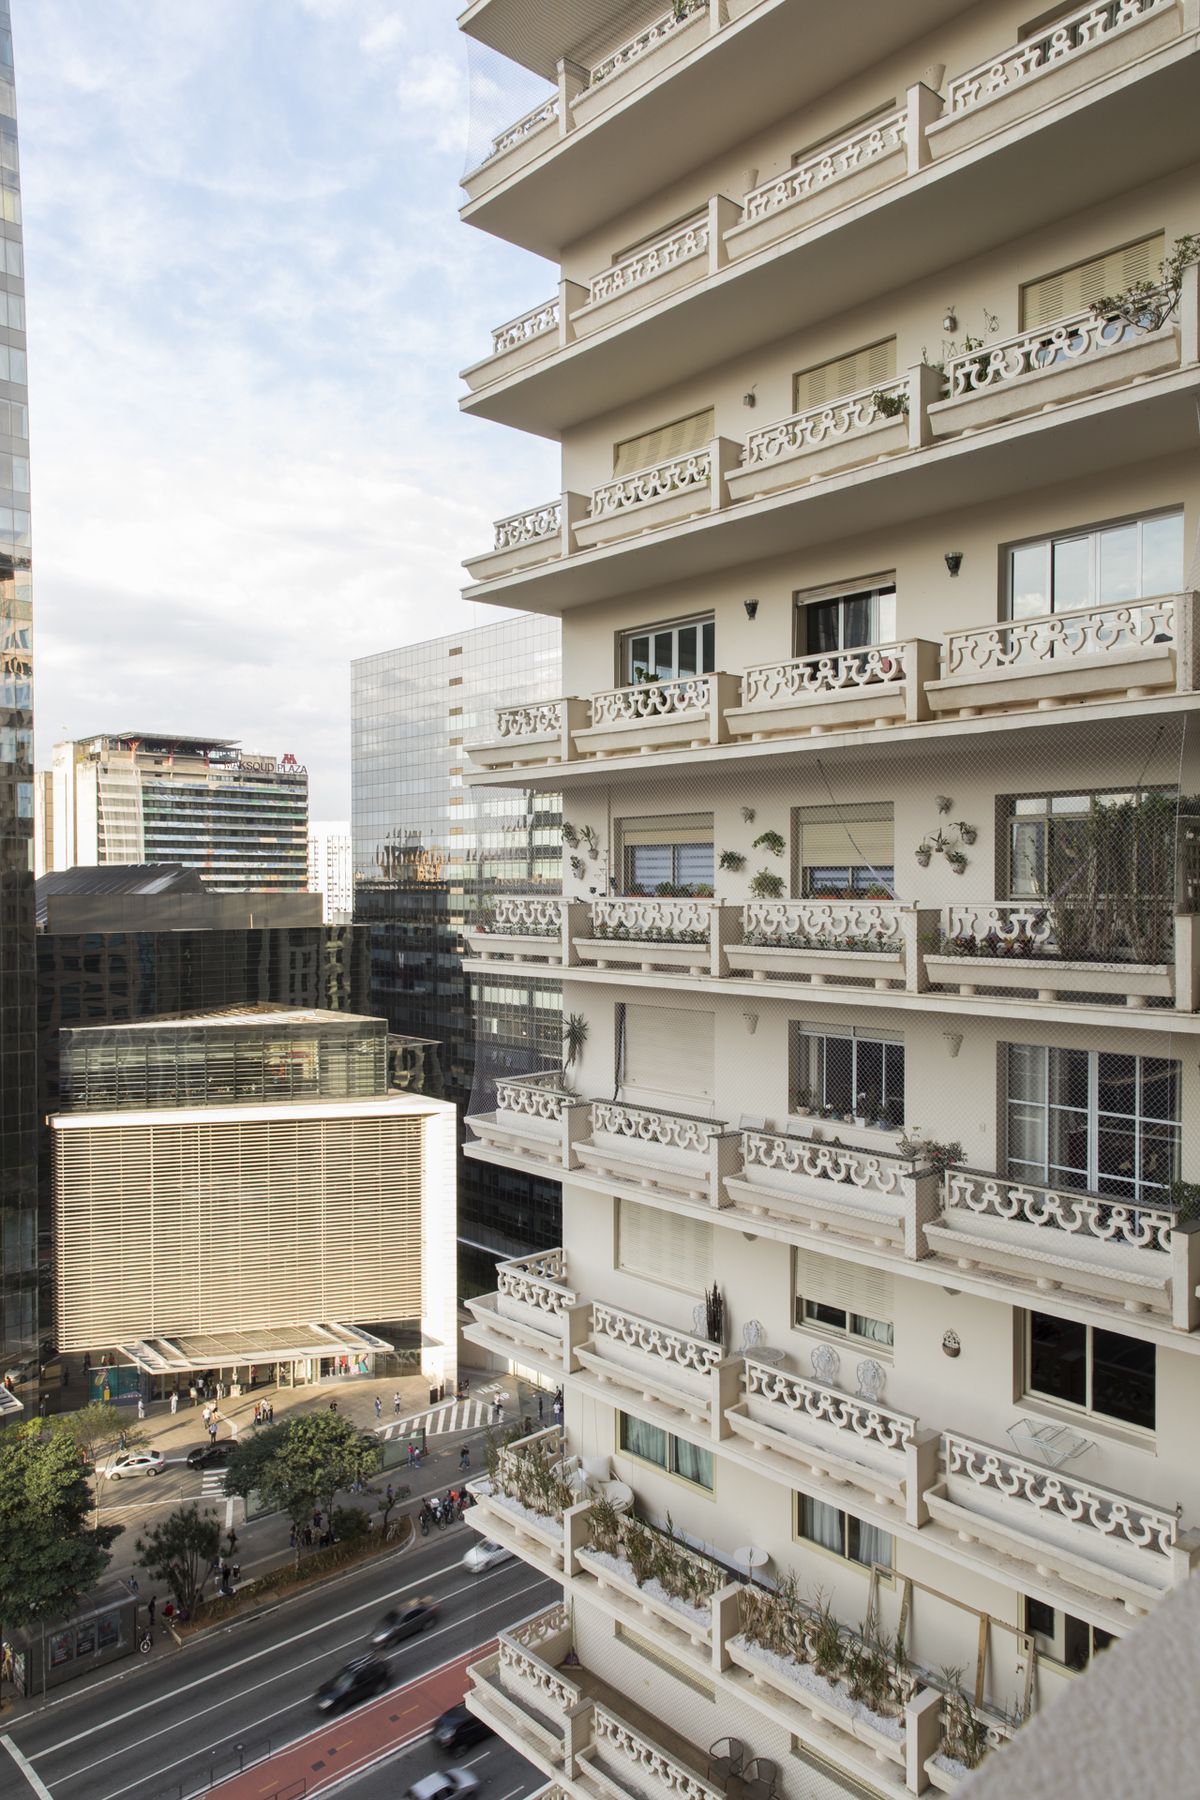 Byt je v budově Santo Honoré, již navrhl architekt João Artacho Jurado.